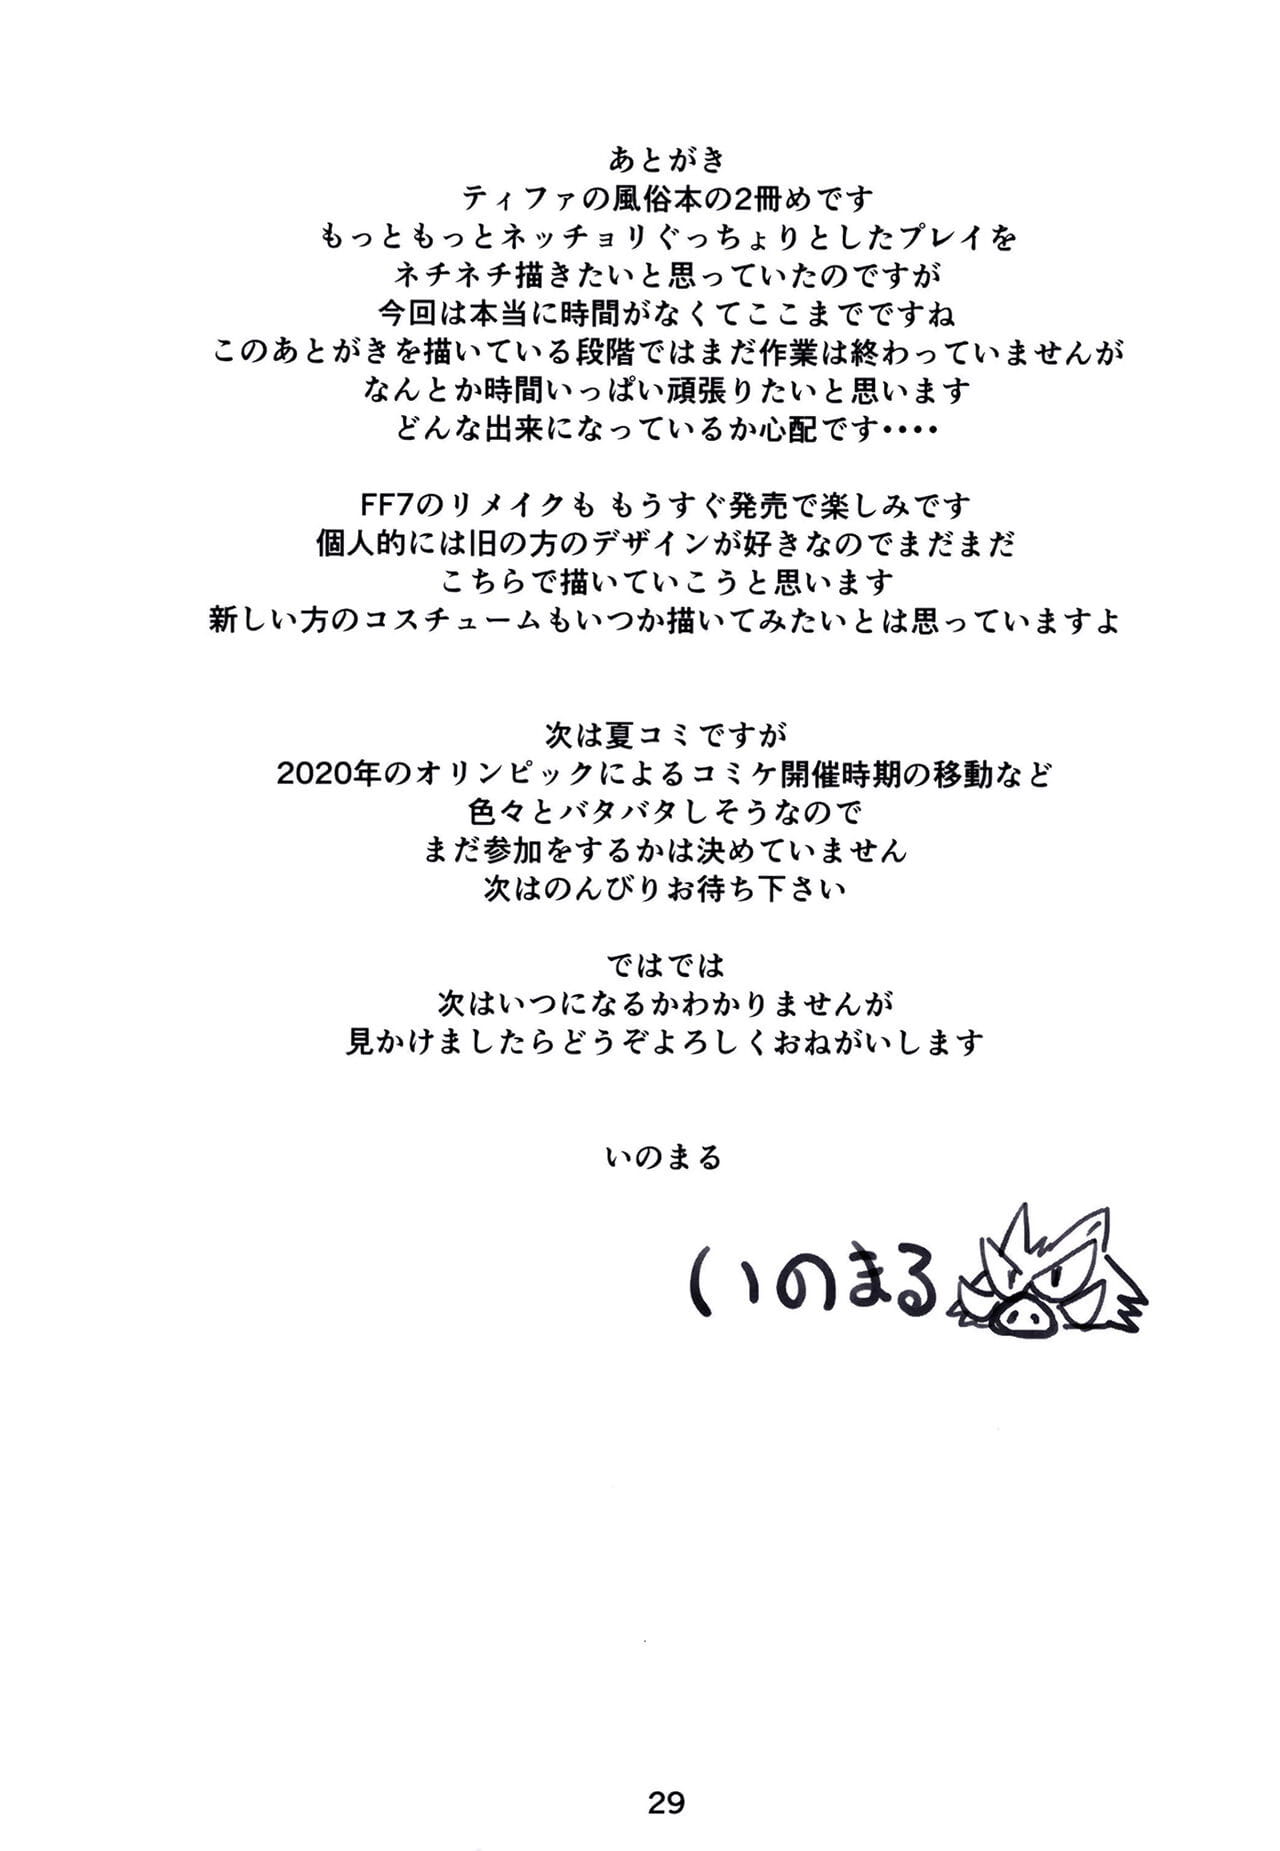 Tifa-san no Fuuzoku Kinmu - 티파씨의 풍속근무 - part 2 page 1